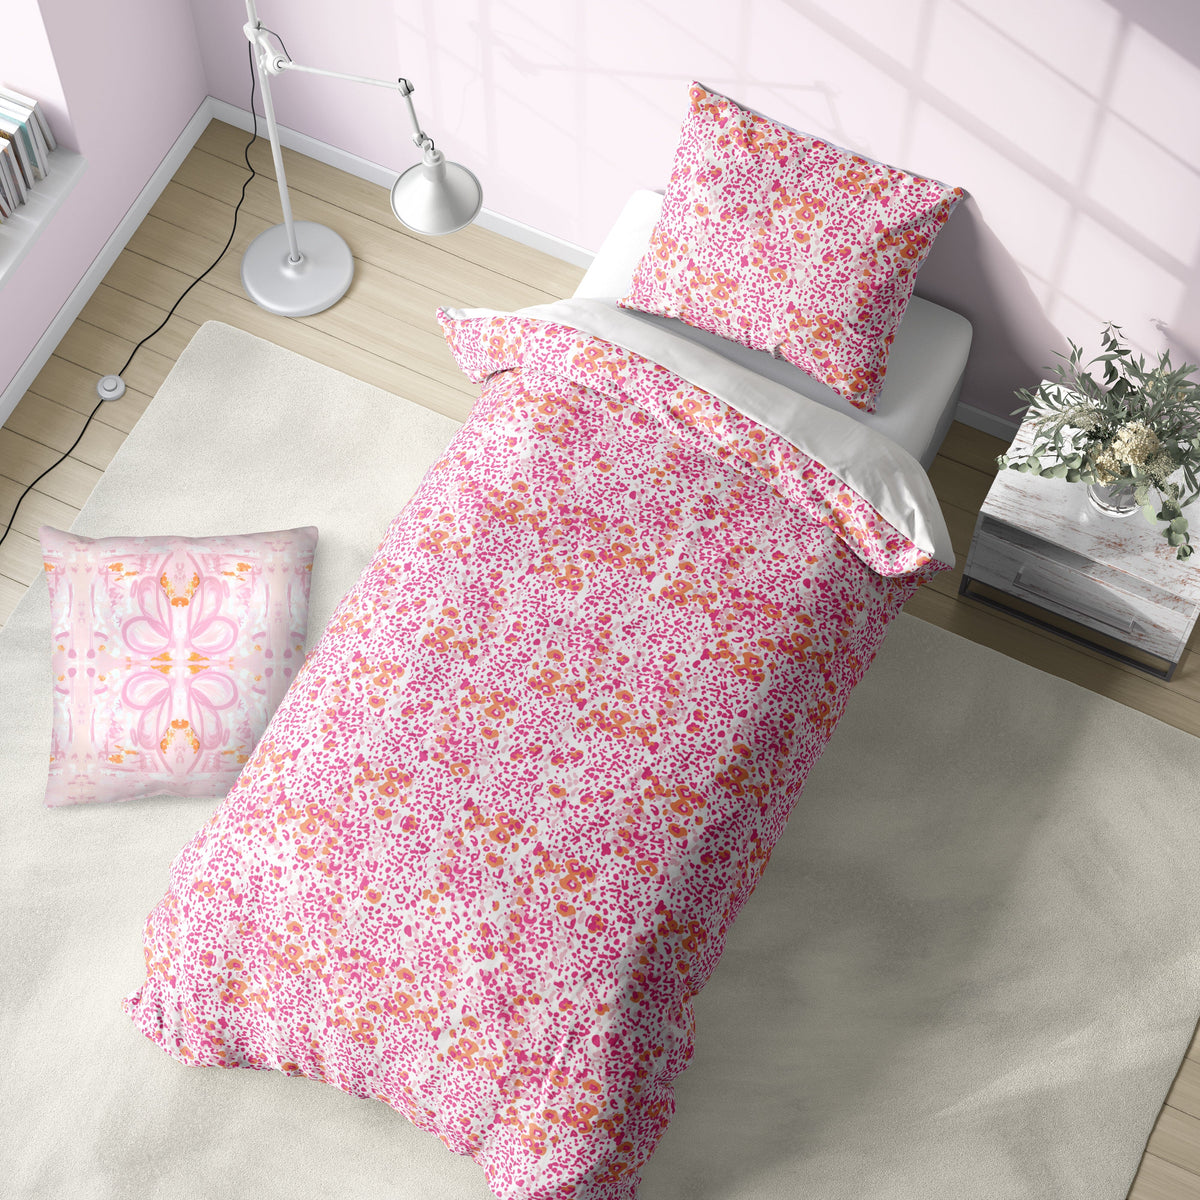 Duvet - Poppy Field Pink Bedding, Duvets MWW XL Twin 